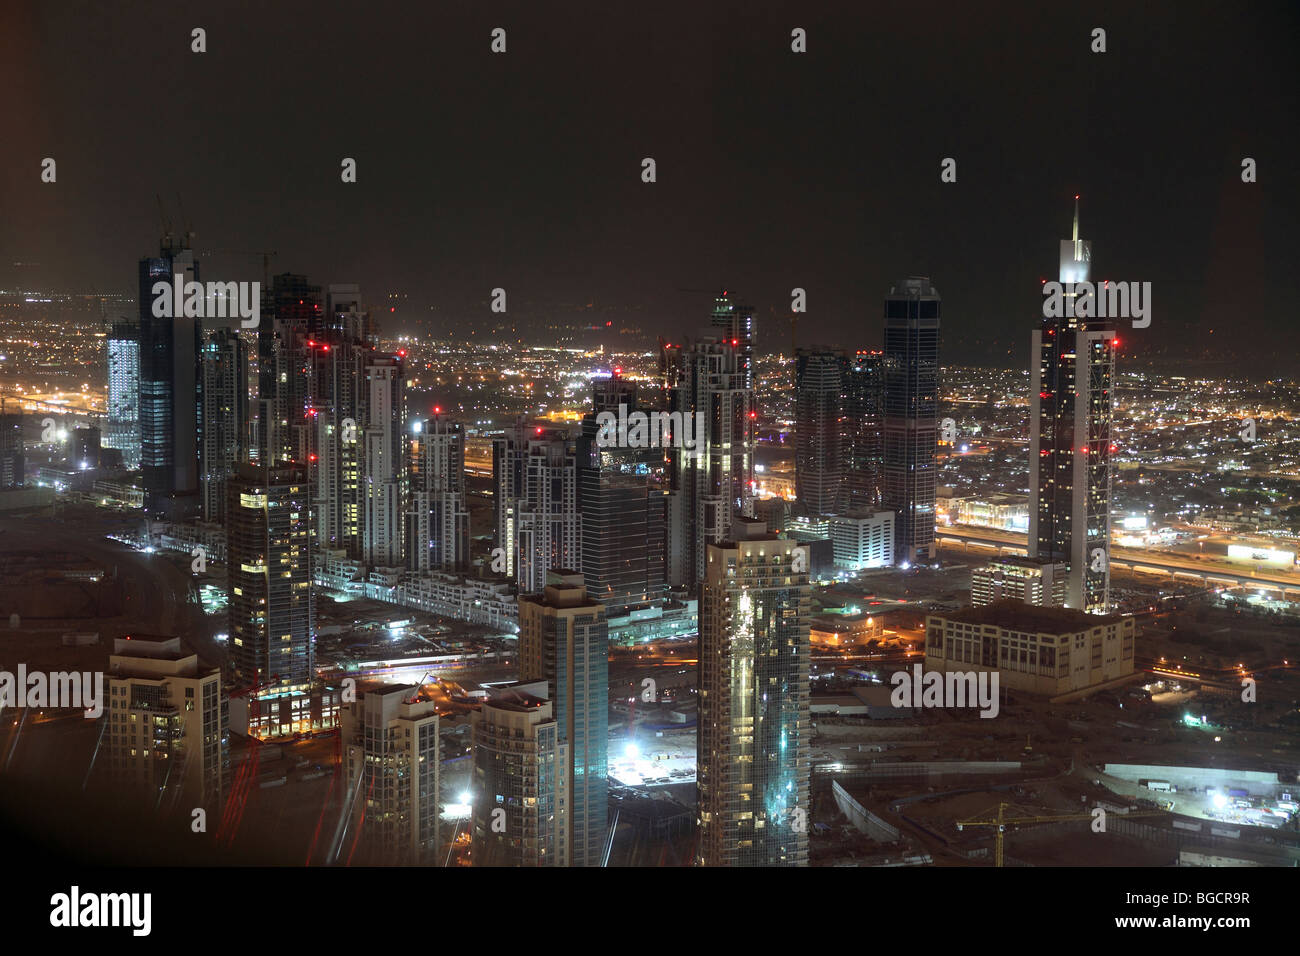 Dubai at night Stock Photo